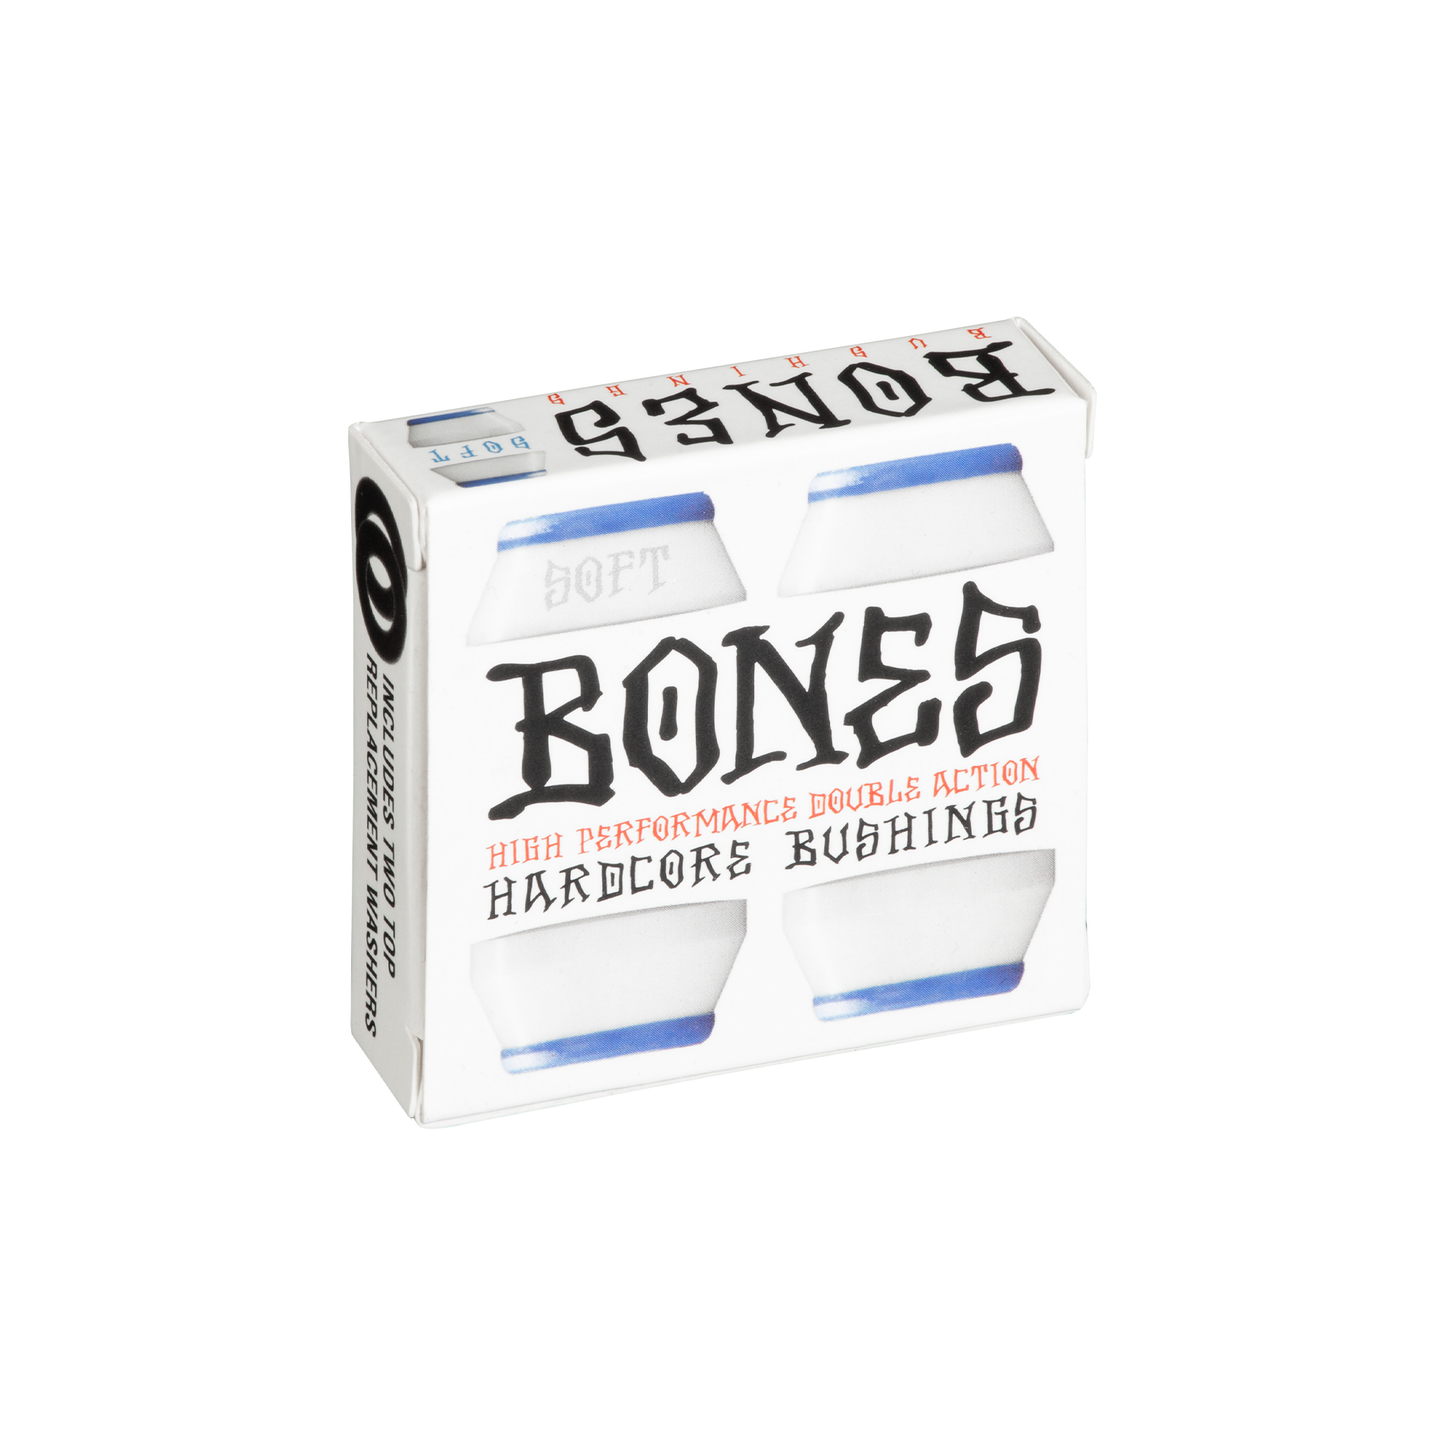 Bones Soft Hardcore Bushings